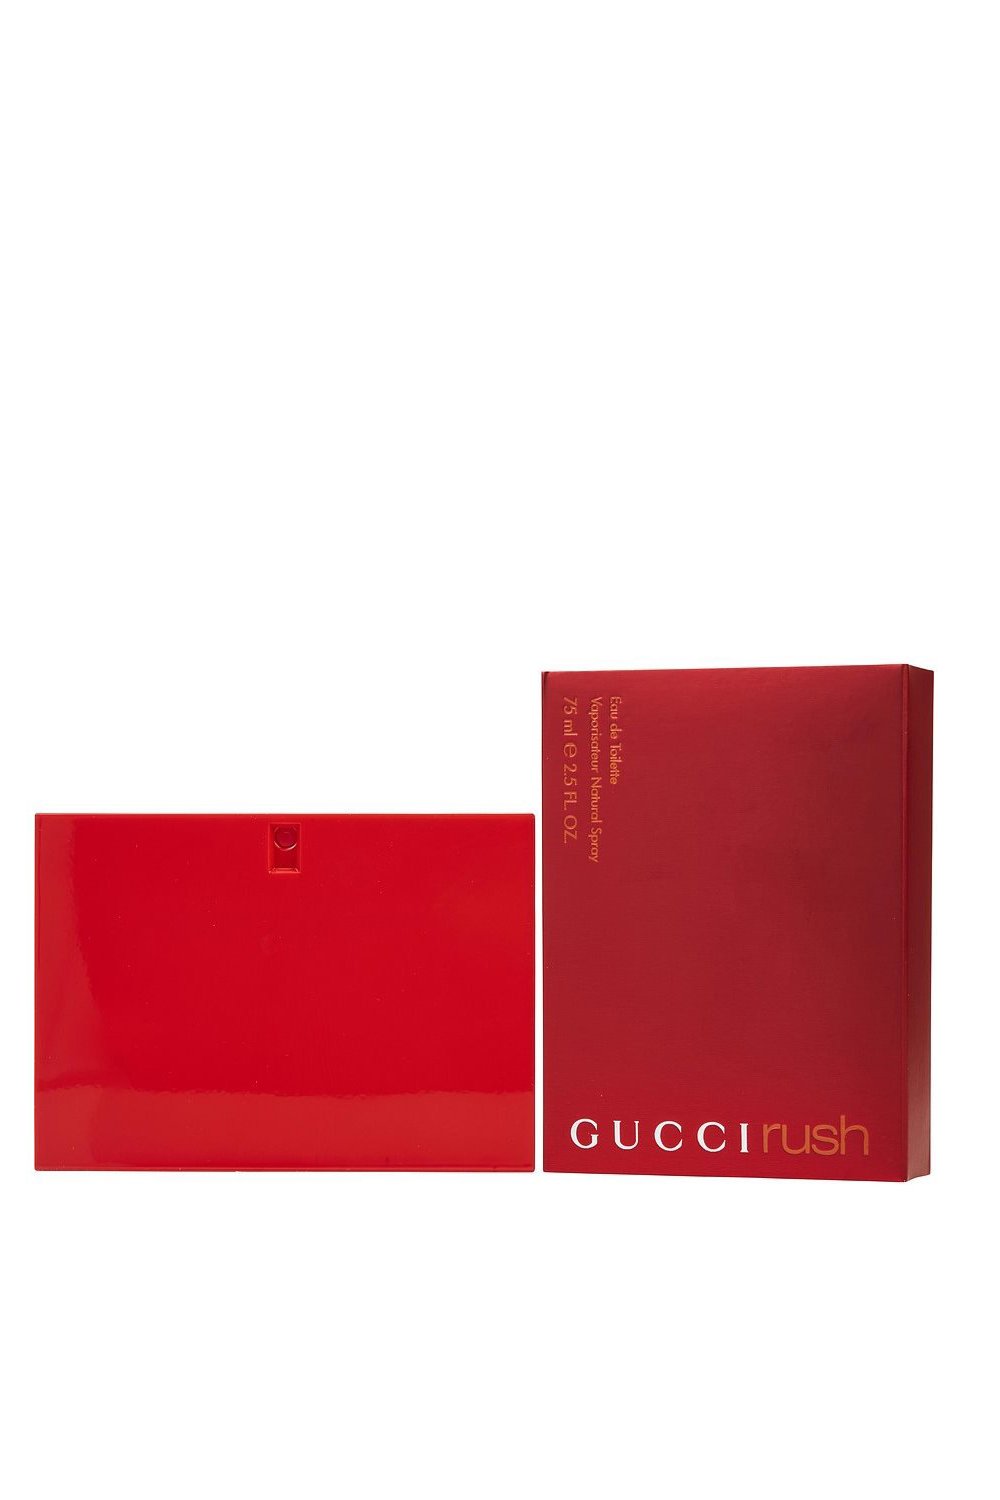 Gucci Rush Edt 75 Ml  Kadın Parfüm 